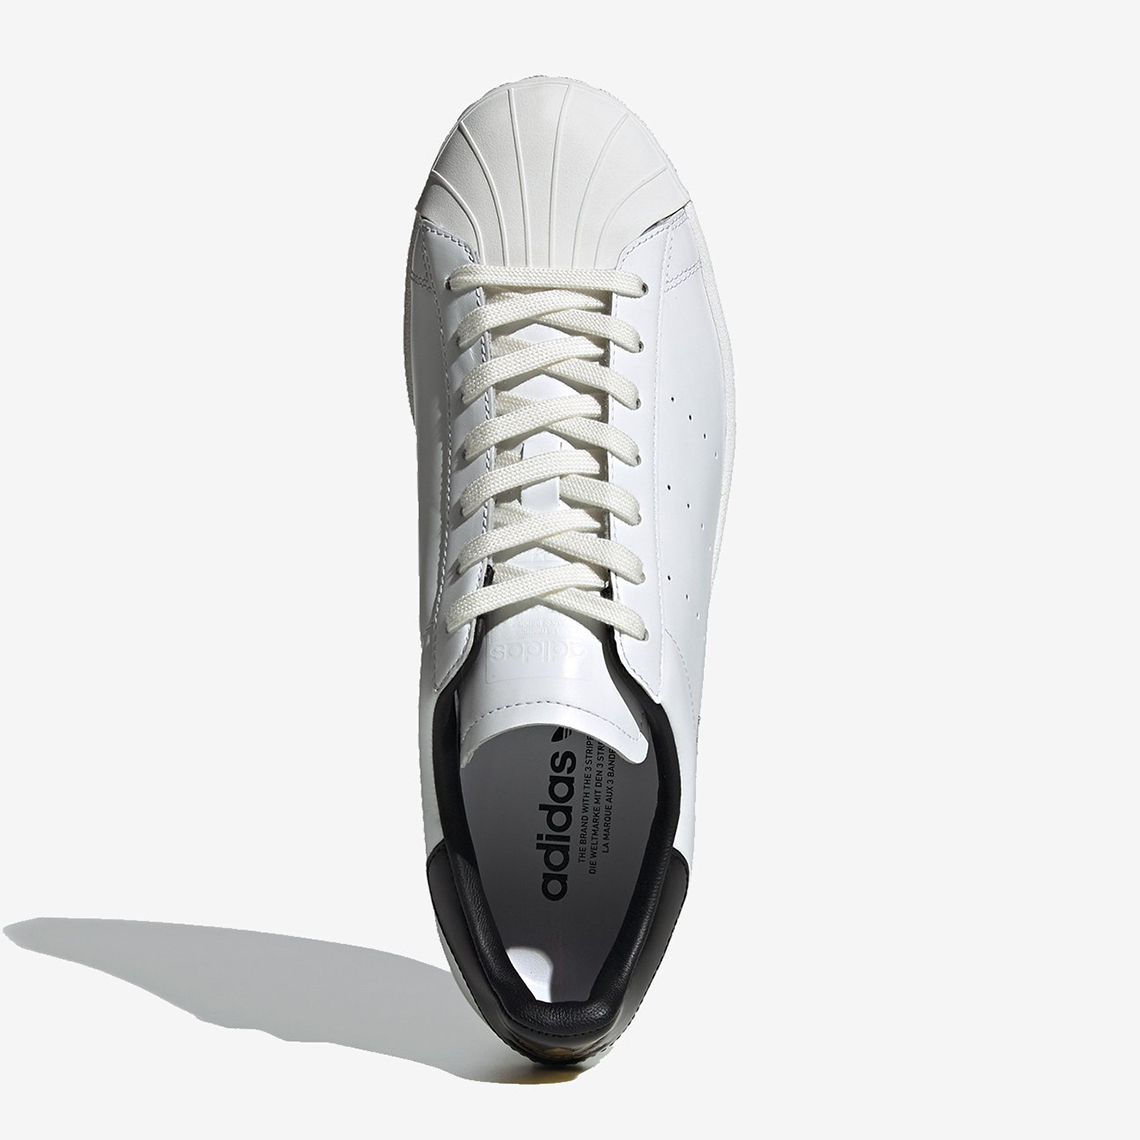 Adidas Superstar Pure London Fv3016 Release Date Sneakernews Com